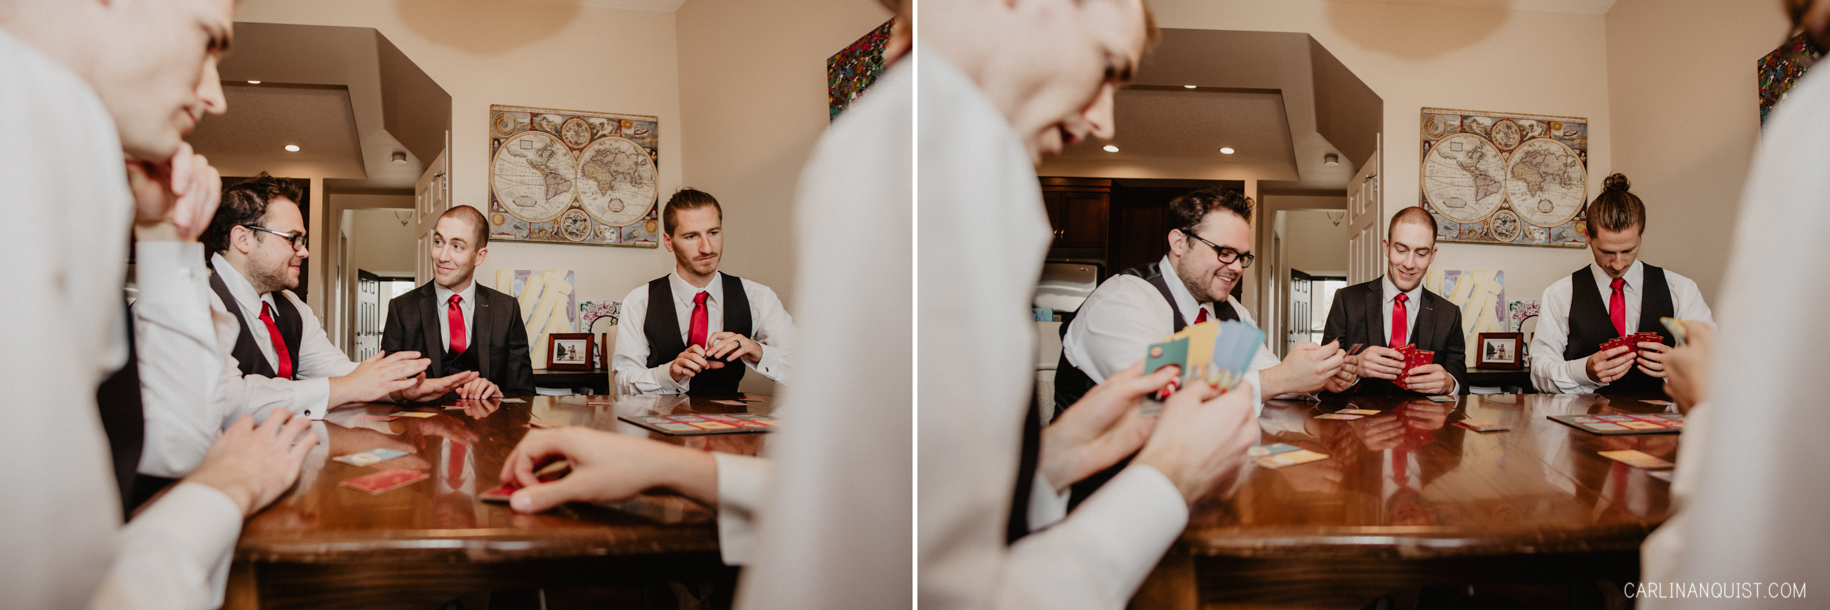 Groom Playing Board Games | Calgary Wedding Photographer